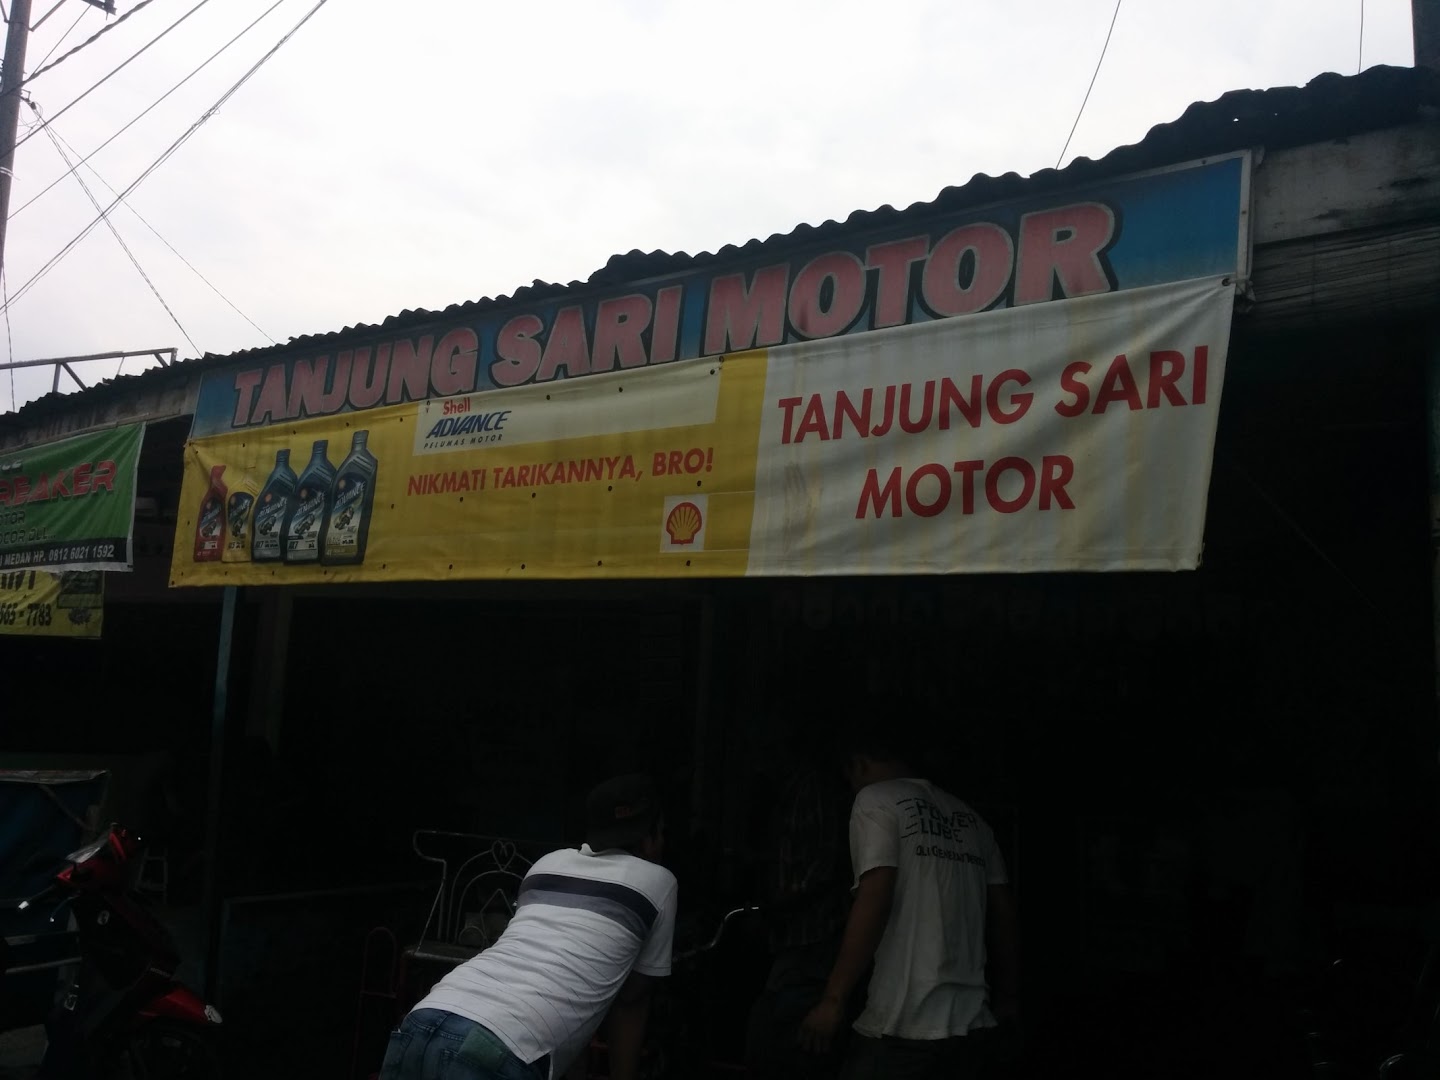 Tanjung Sari Motor Photo